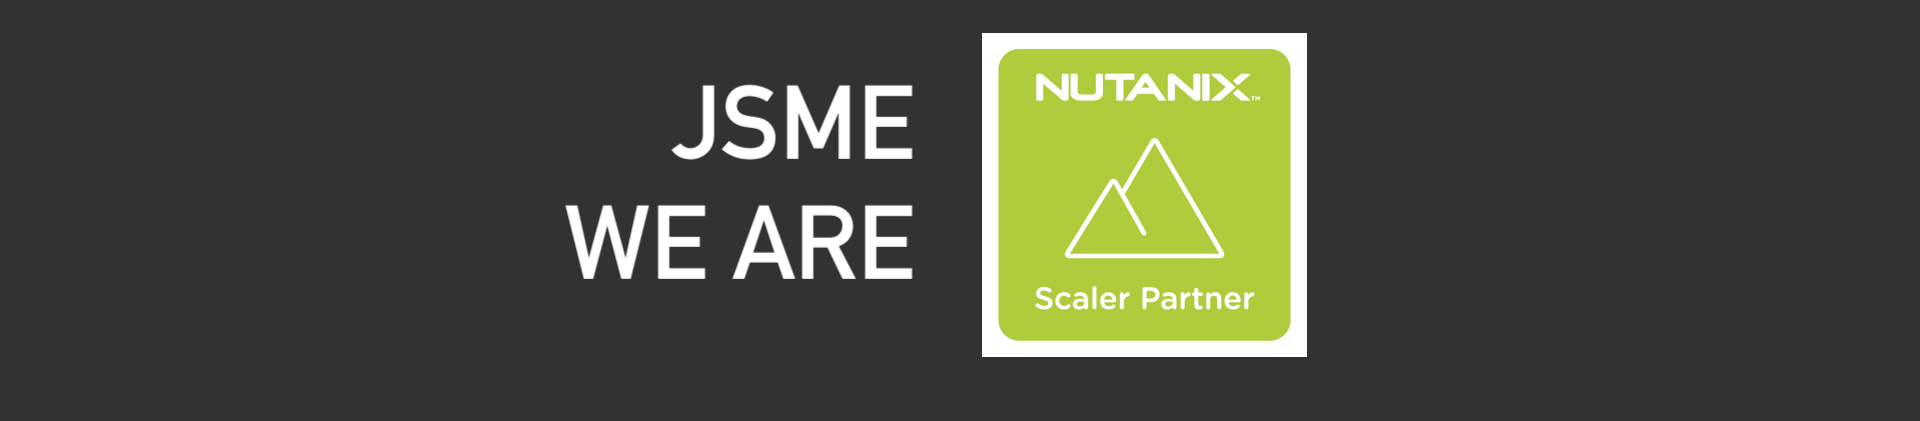 We are Nutanix Scaler Partner